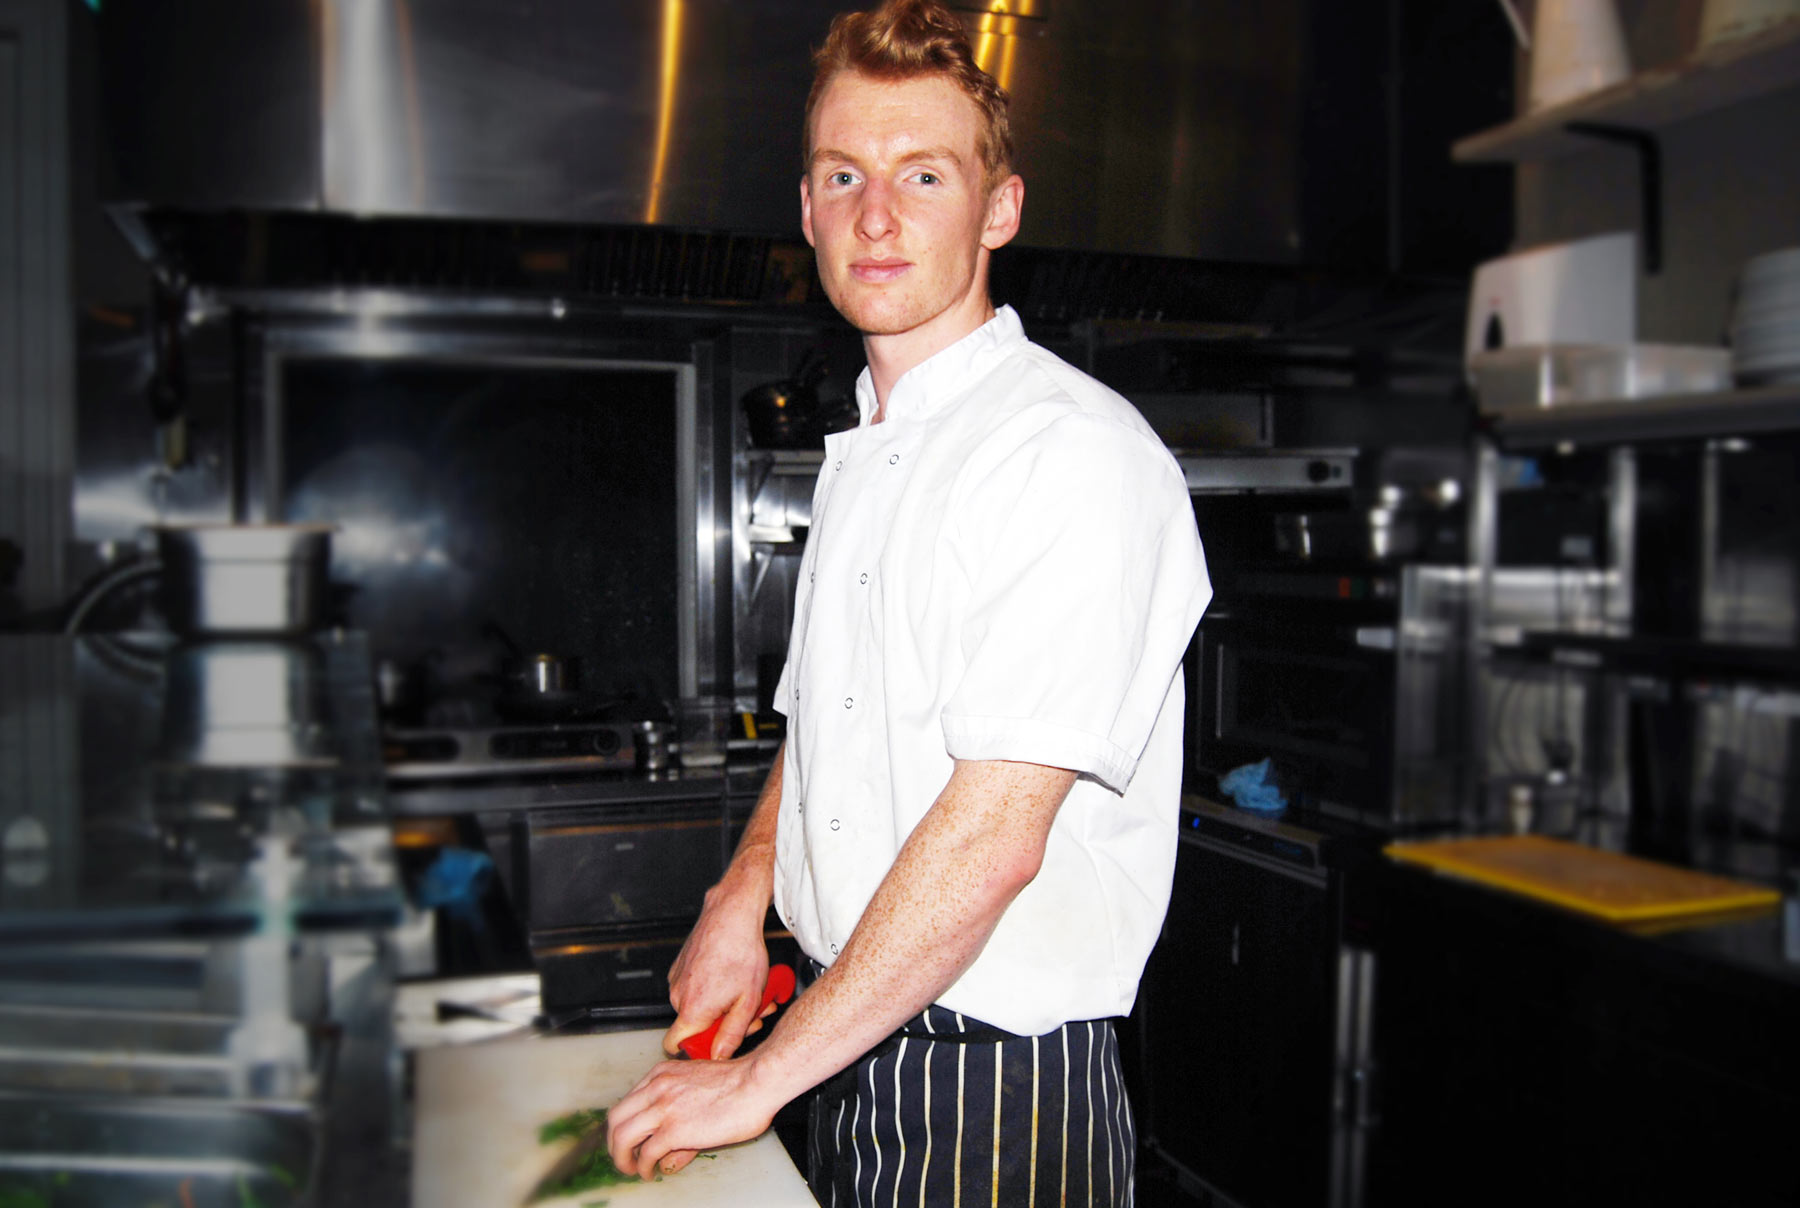 Filmore & Union’s new nutritionist chef, Jake Chapman